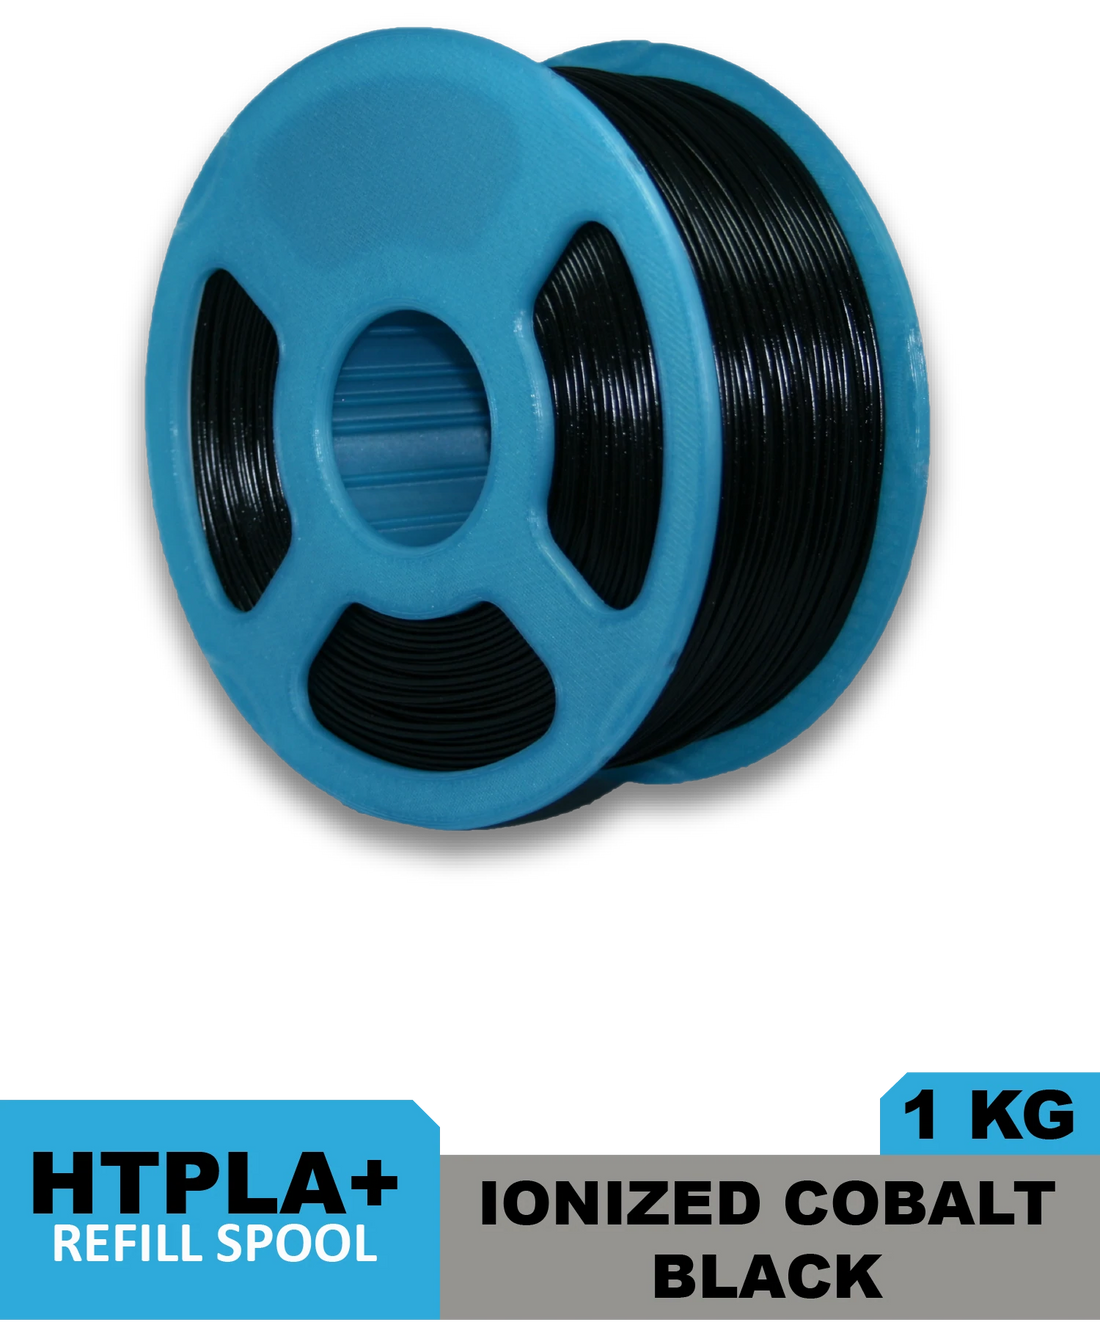 HTPLA - Ionized Cobalt Black